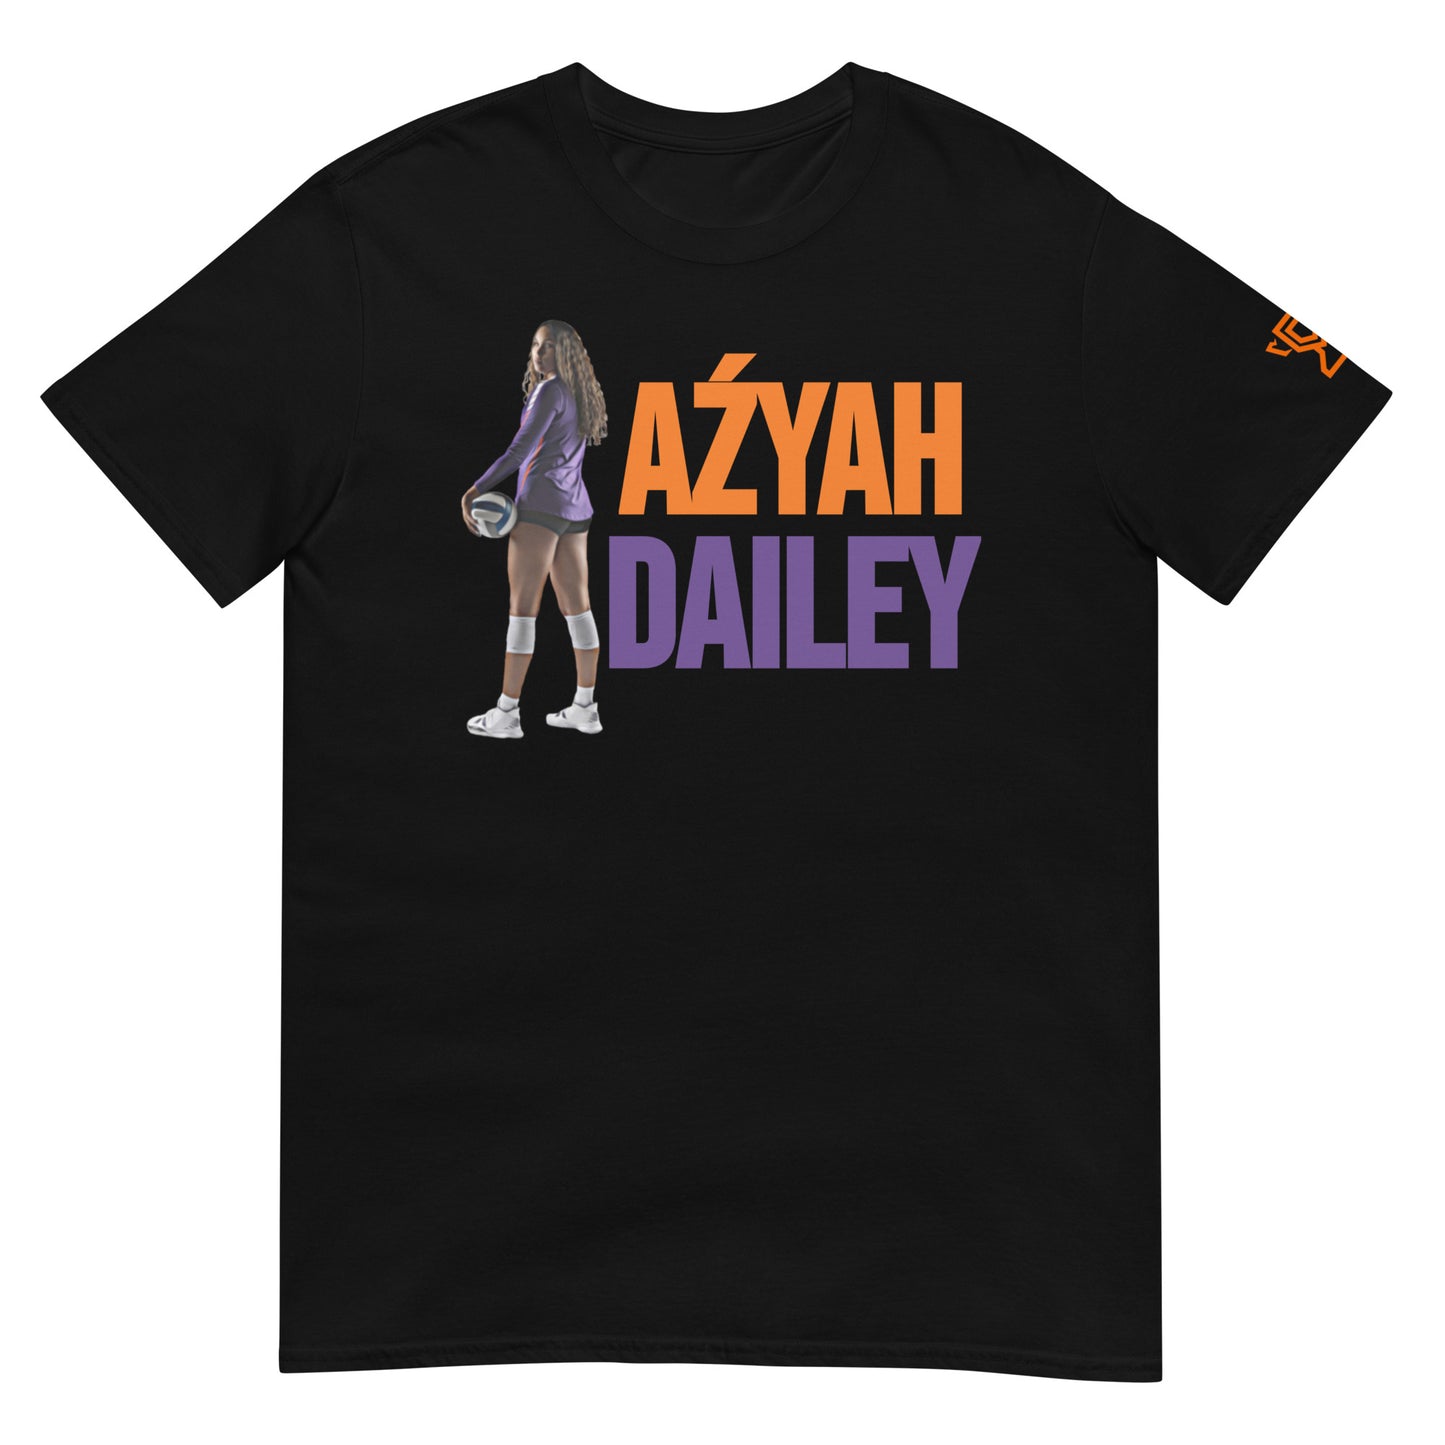 Black t-shirt featuring Aźyah Dailey